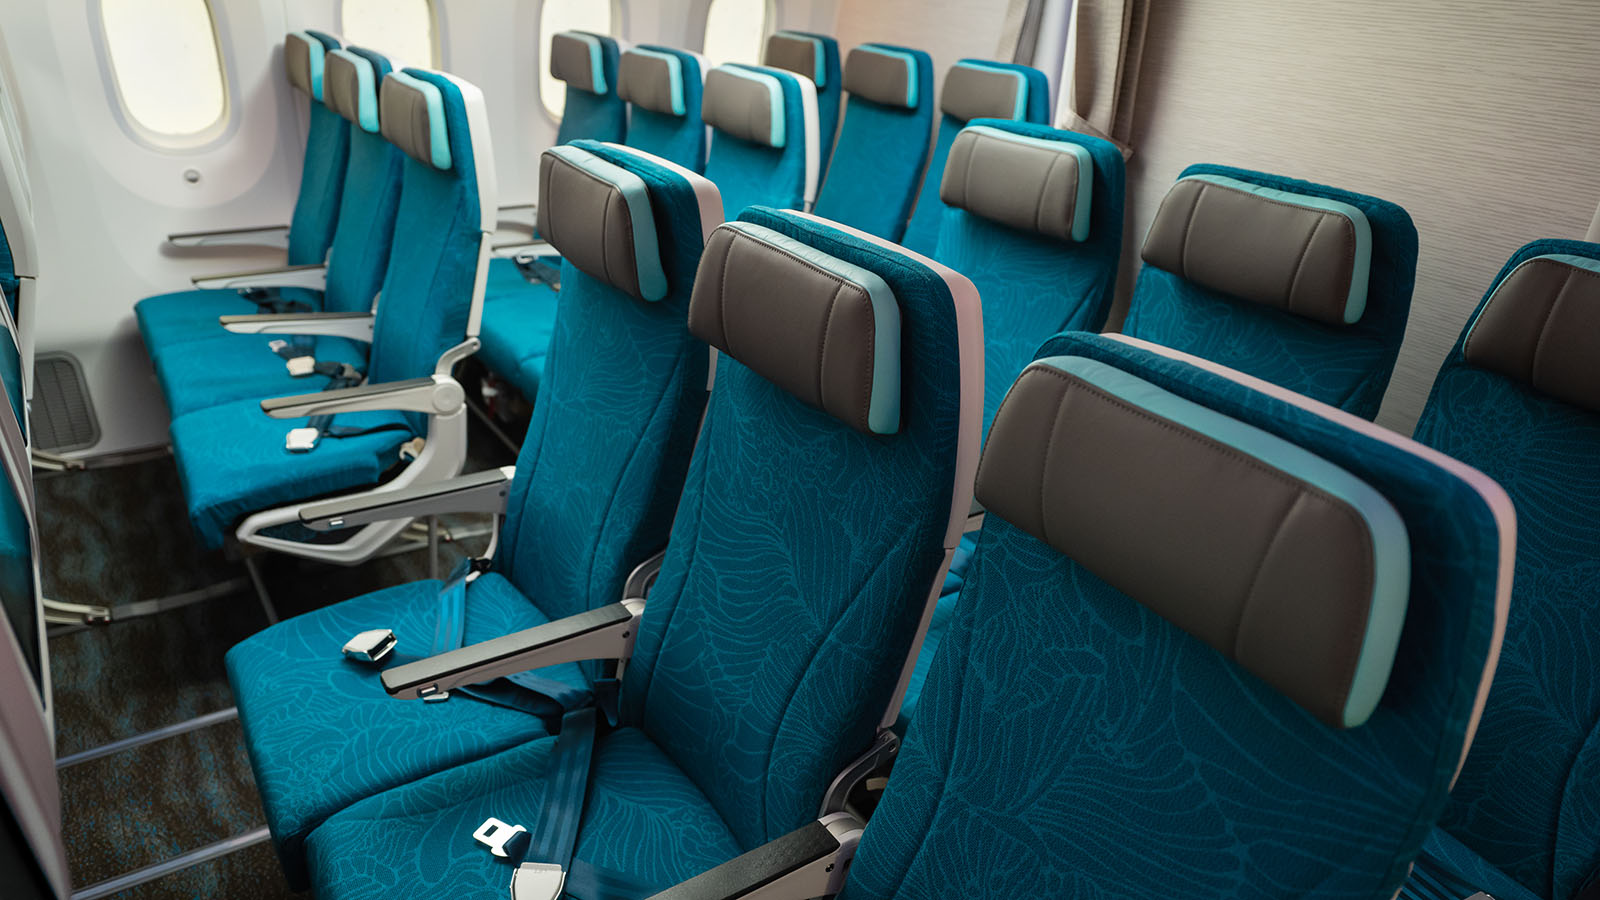 Regular seating on Hawaiian Airlines' Dreamliner